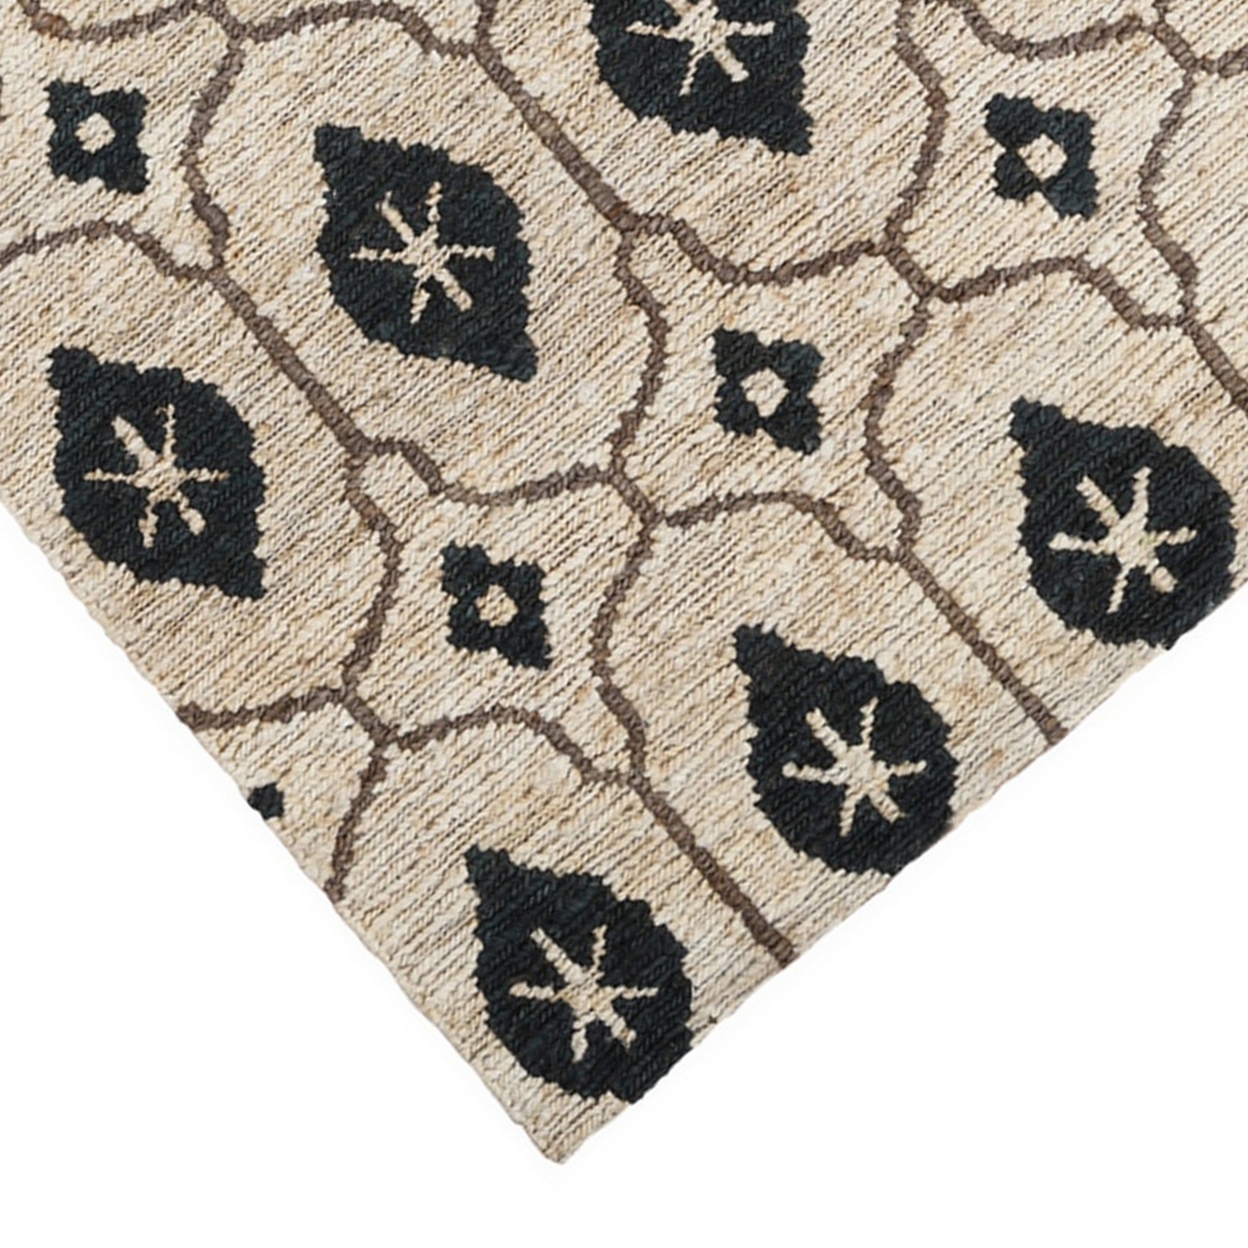 Raya 5 X 8 Area Rug, Handwoven Moroccan Inspired Pattern, Soft Ivory Jute- Saltoro Sherpi